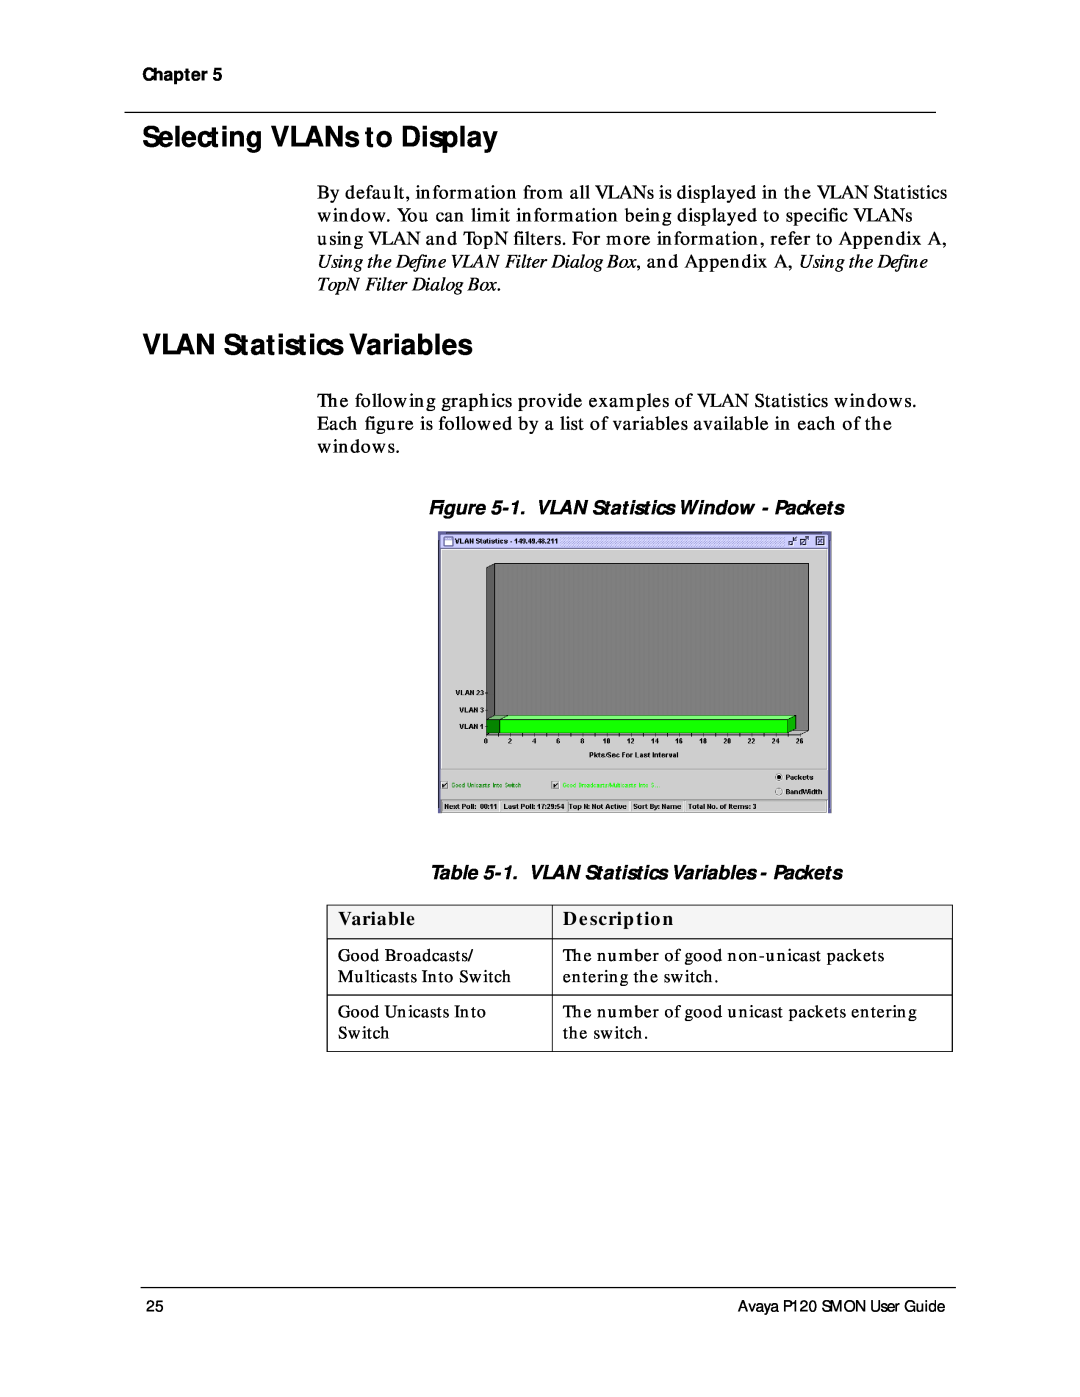 Avaya P120 SMON manual Selecting VLANs to Display, VLAN Statistics Variables, 1. VLAN Statistics Window - Packets 